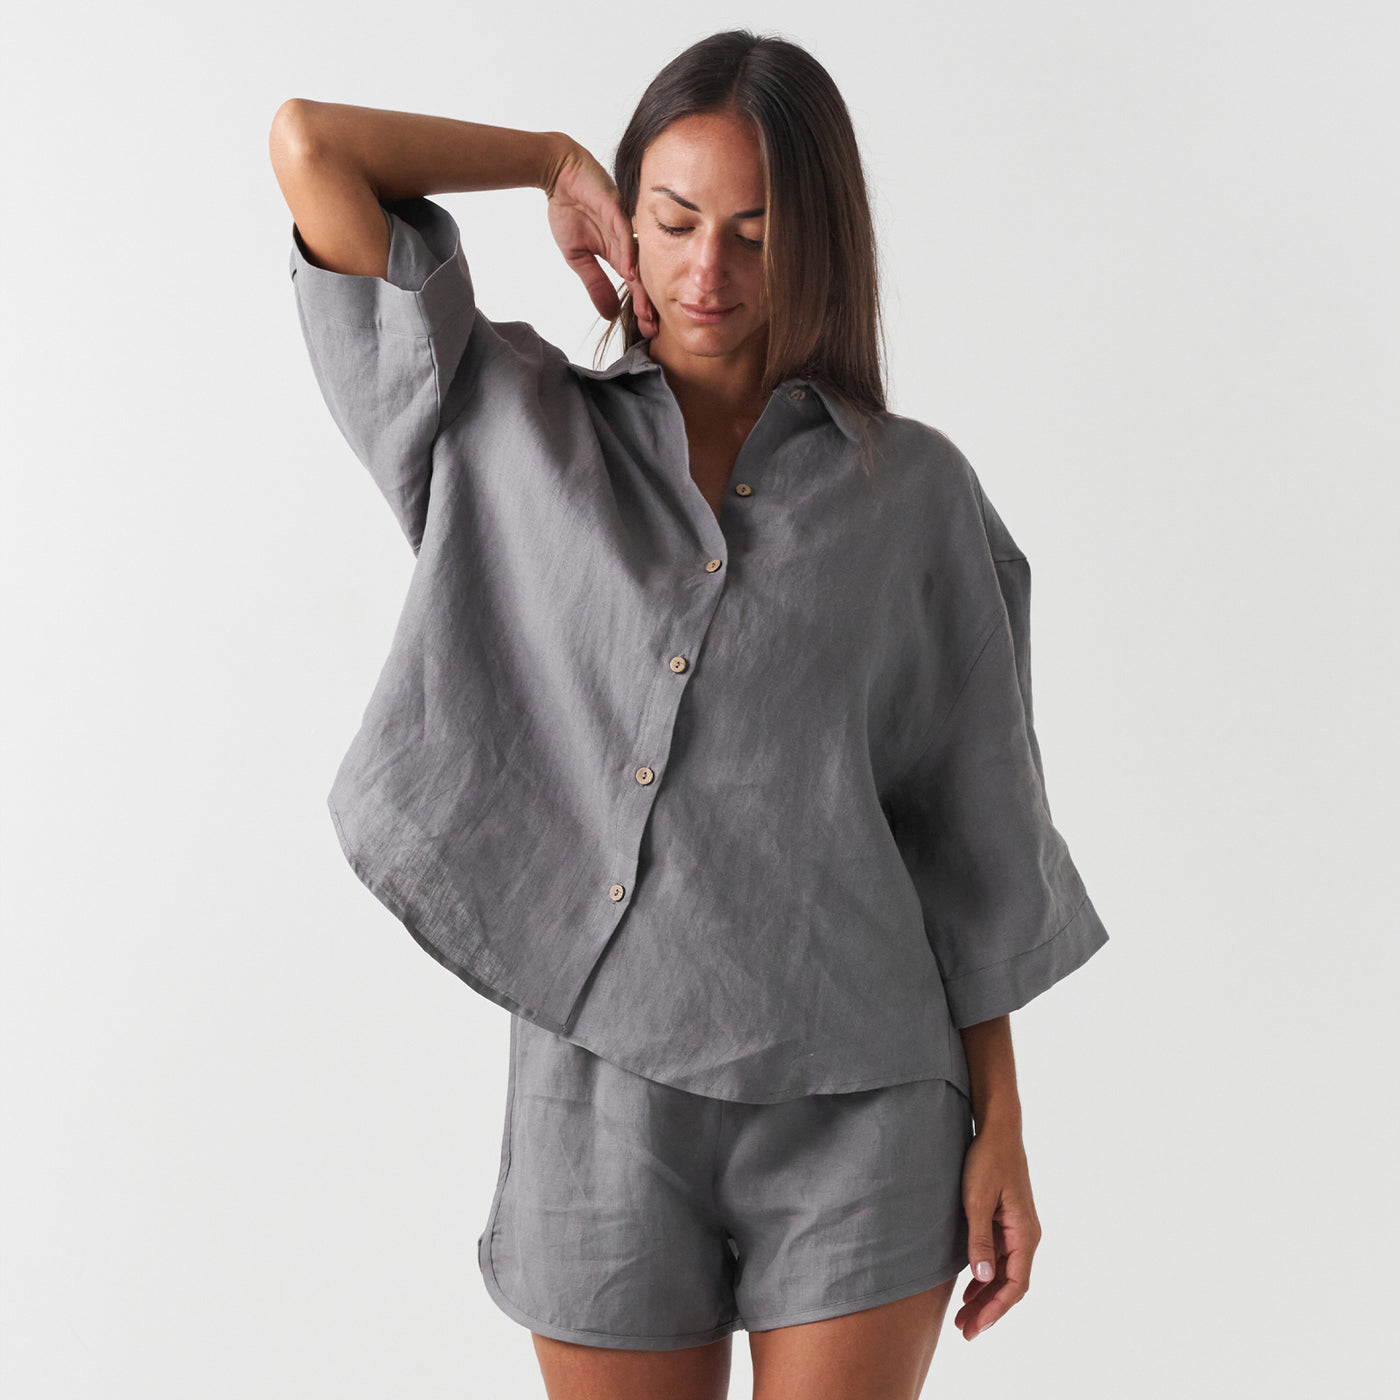 French Flax Linen Ruby Shirt in Warm Grey